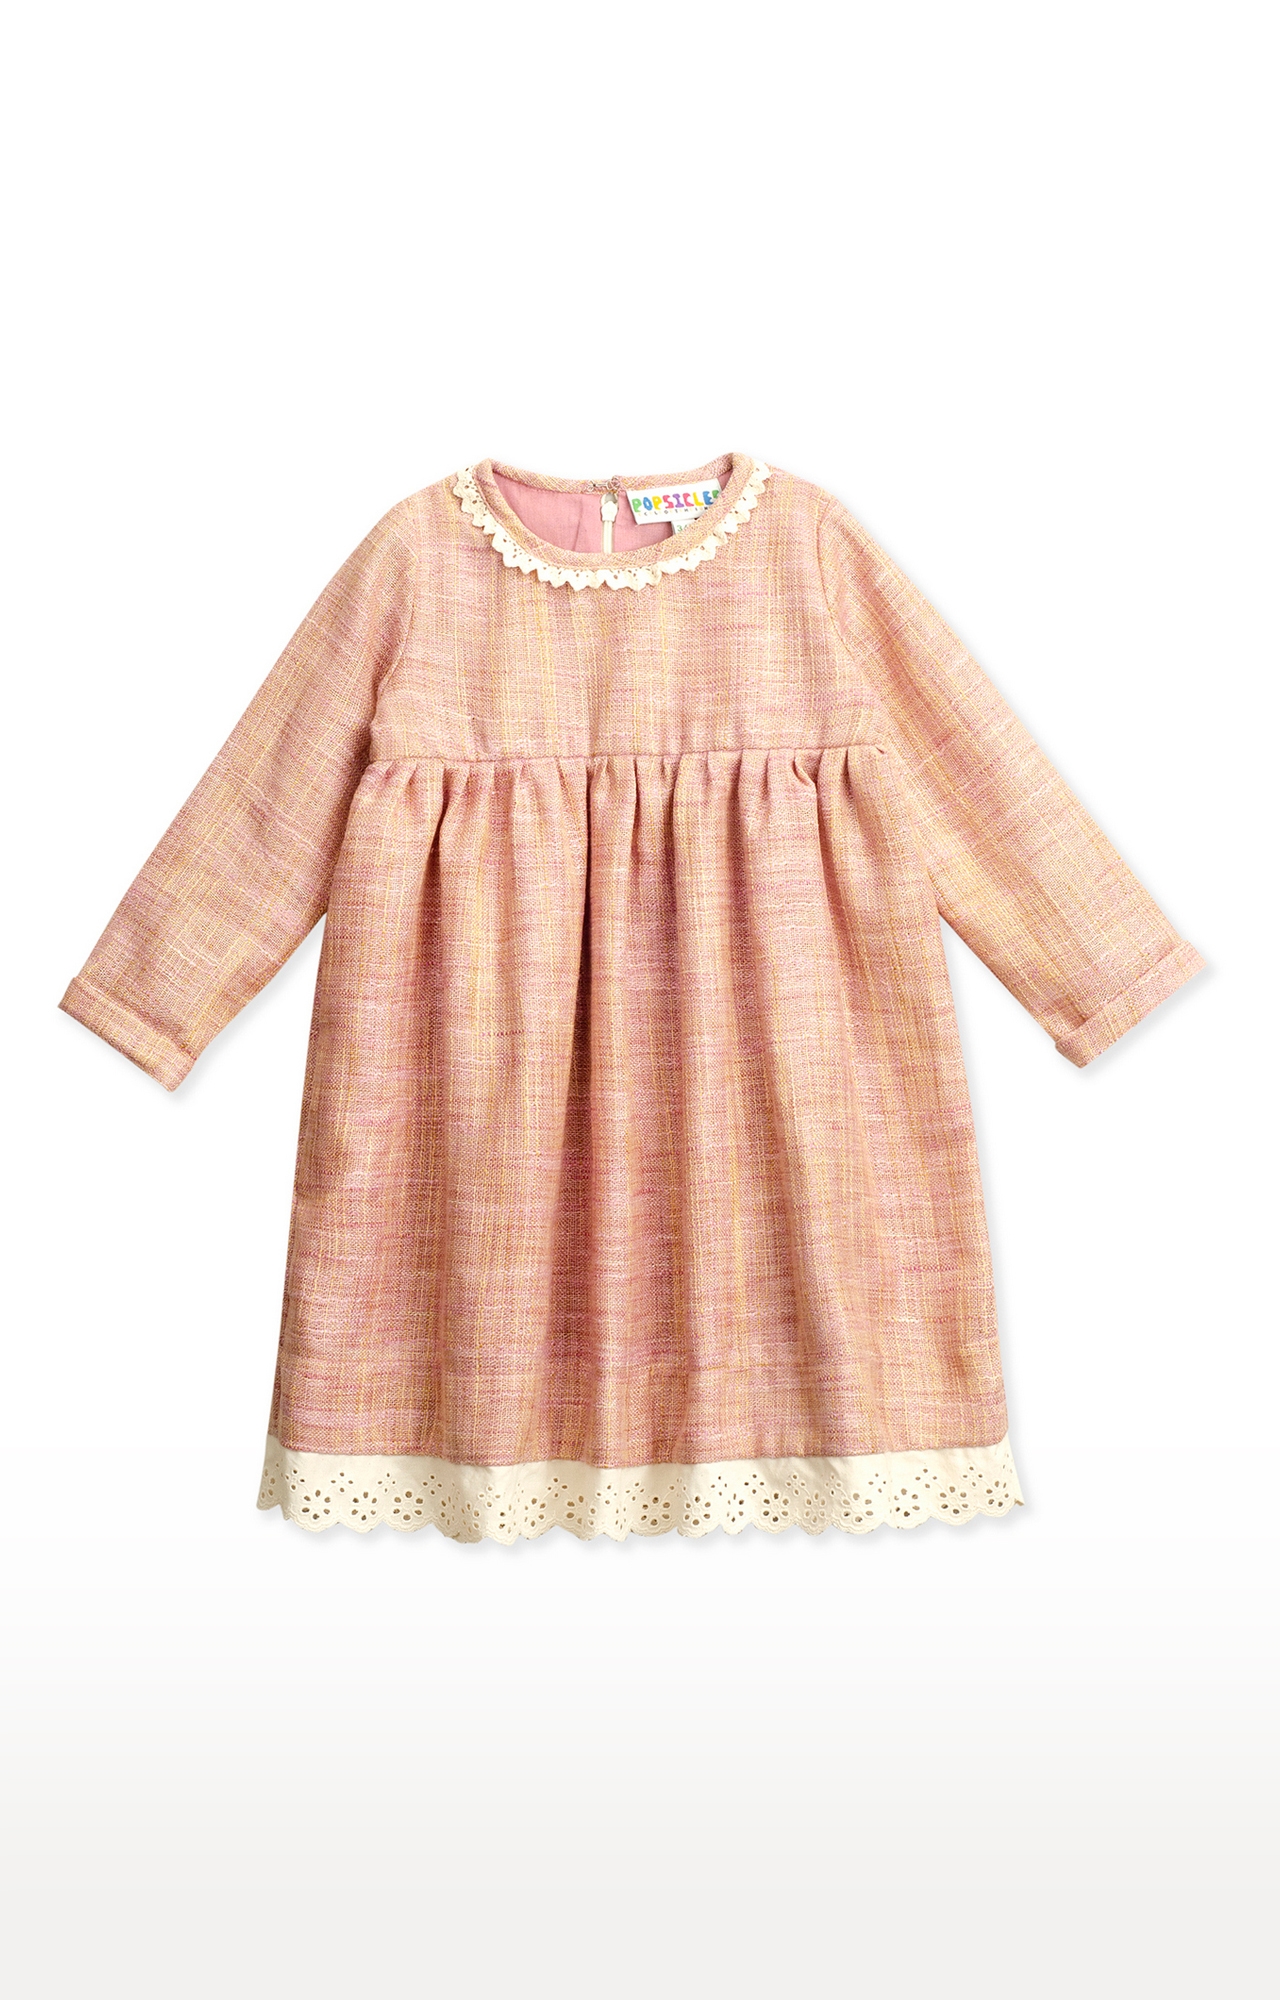 Popsicles Clothing | Popsicles Girls Handloom Cotton Slush Dress - Pink (1-2 Years) 0